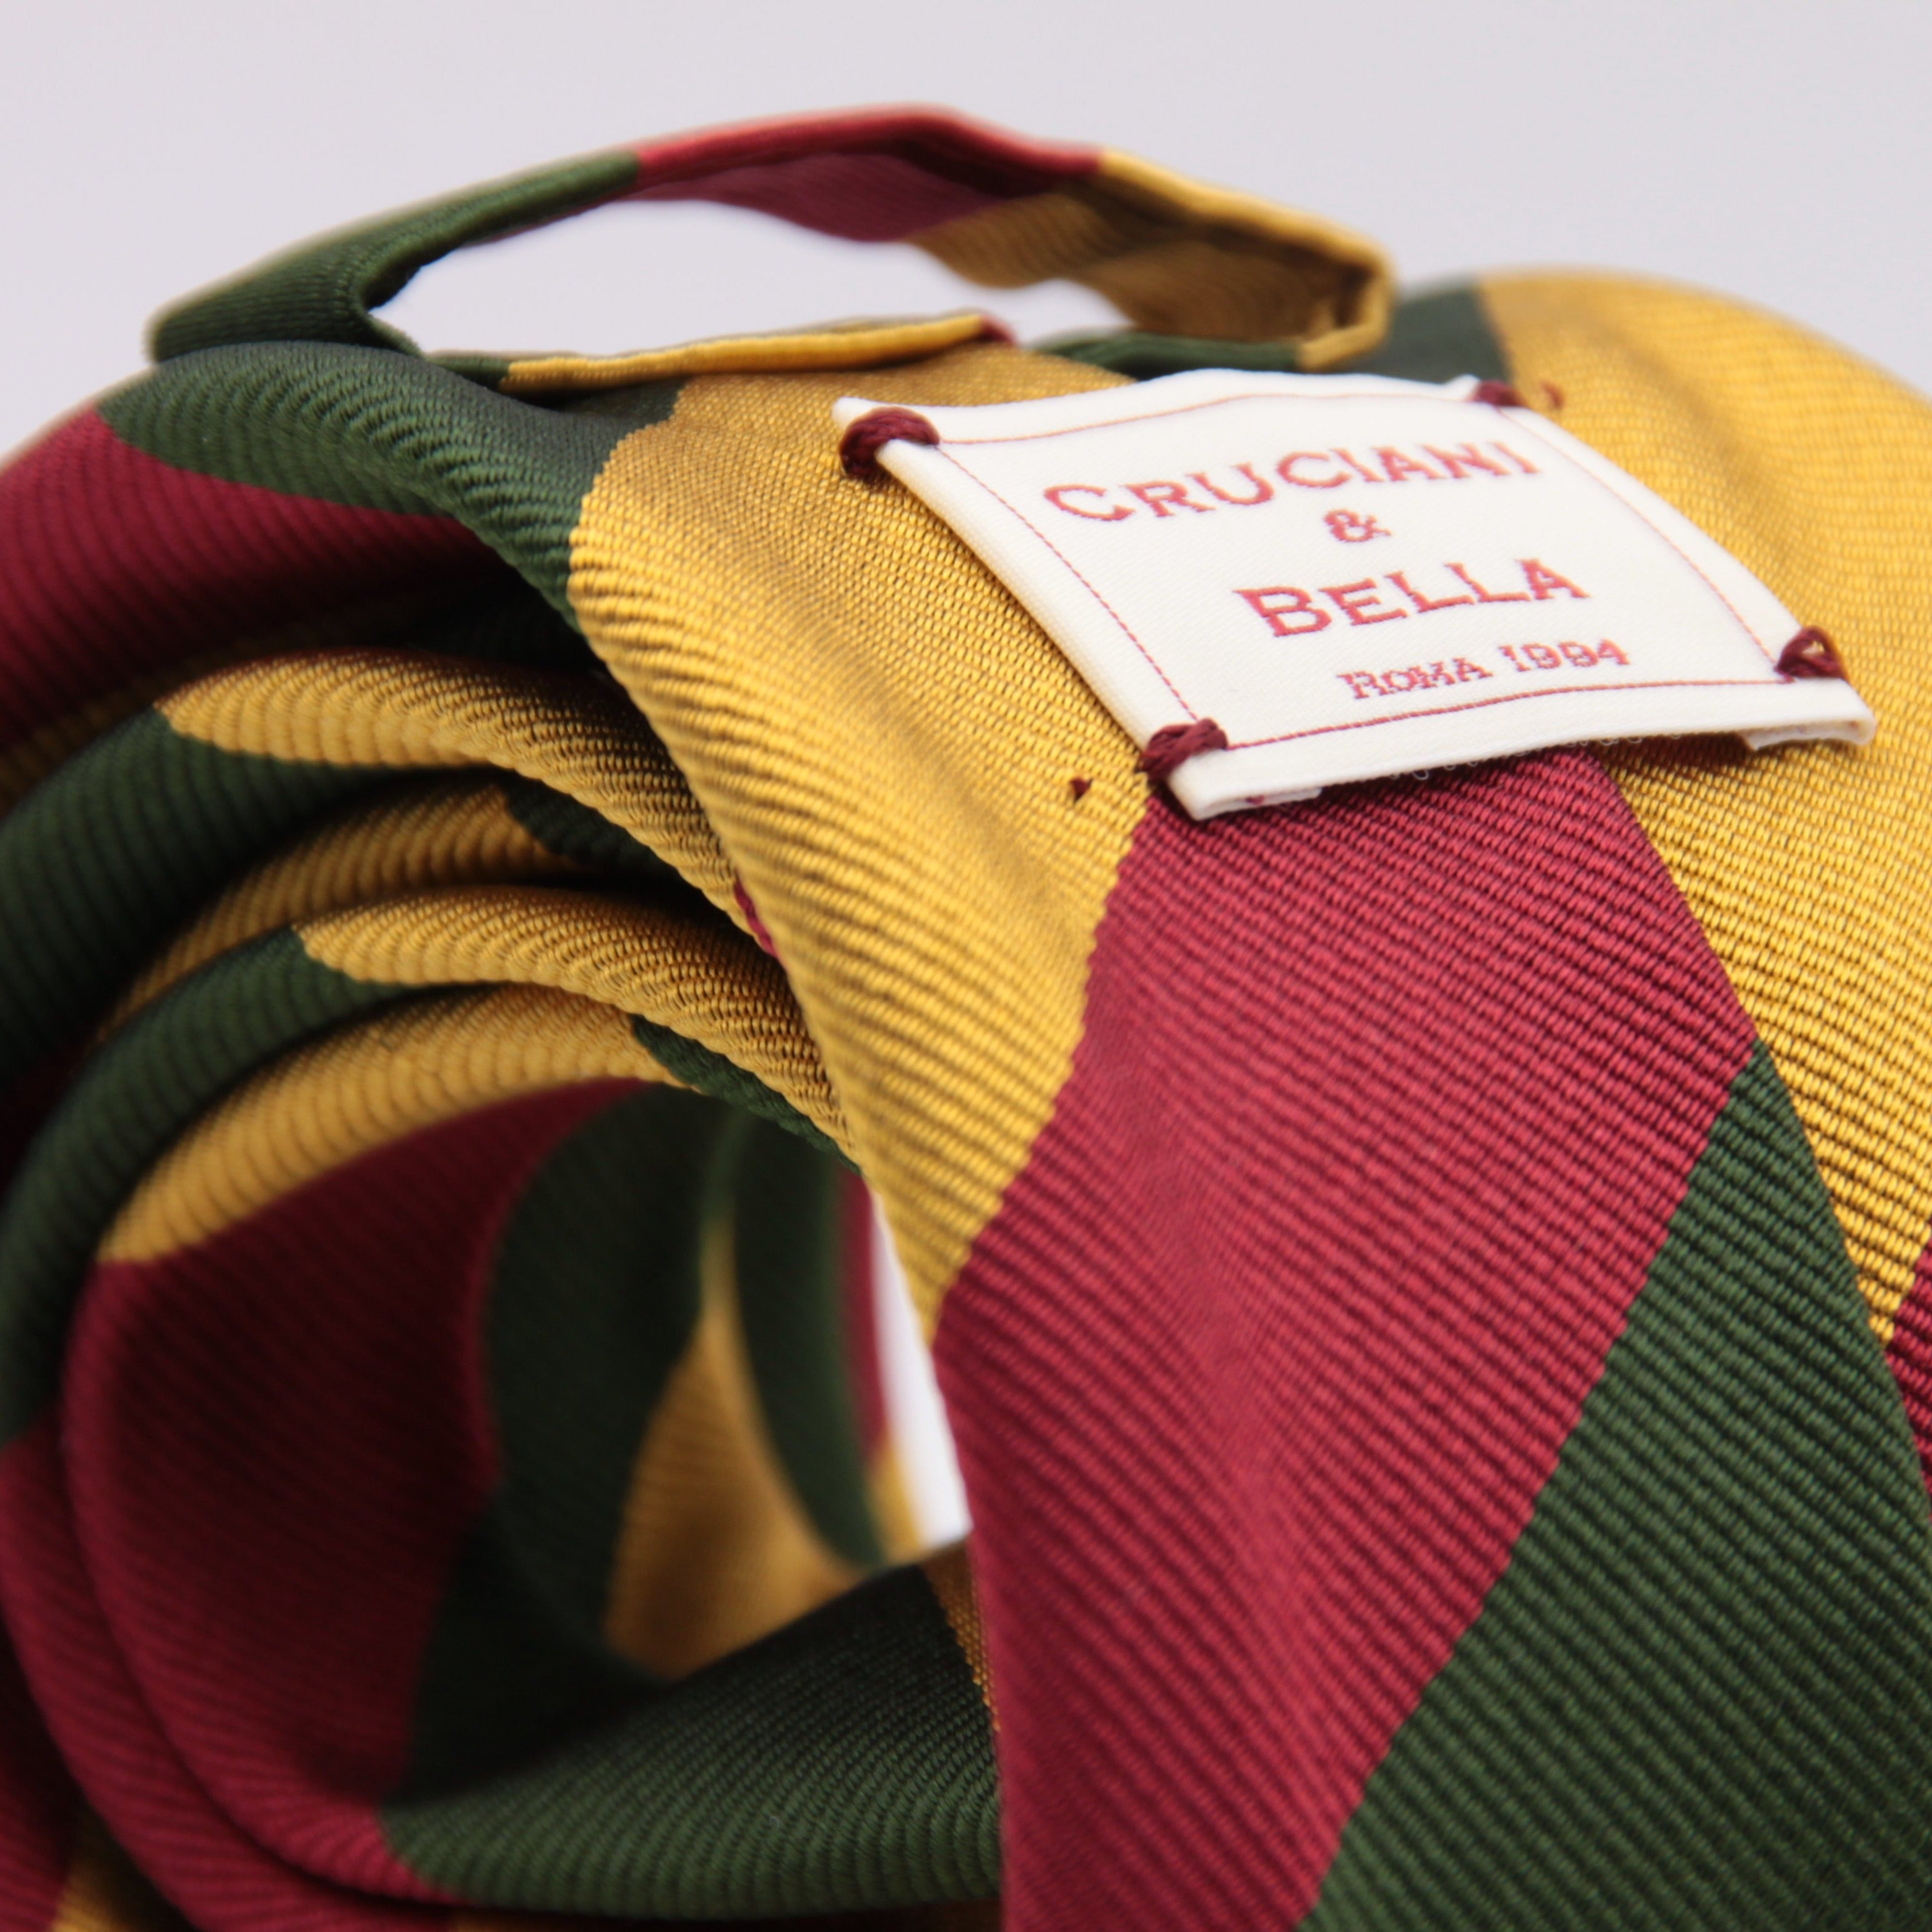 Cruciani & Bella 100% Silk Slim Shape Jacquard  Unlined Regimental "6th Inniskilling Dragoon Guards" Green, Red and Gold stripes tie Handmade in Italy 8 cm x 150 cm #6155